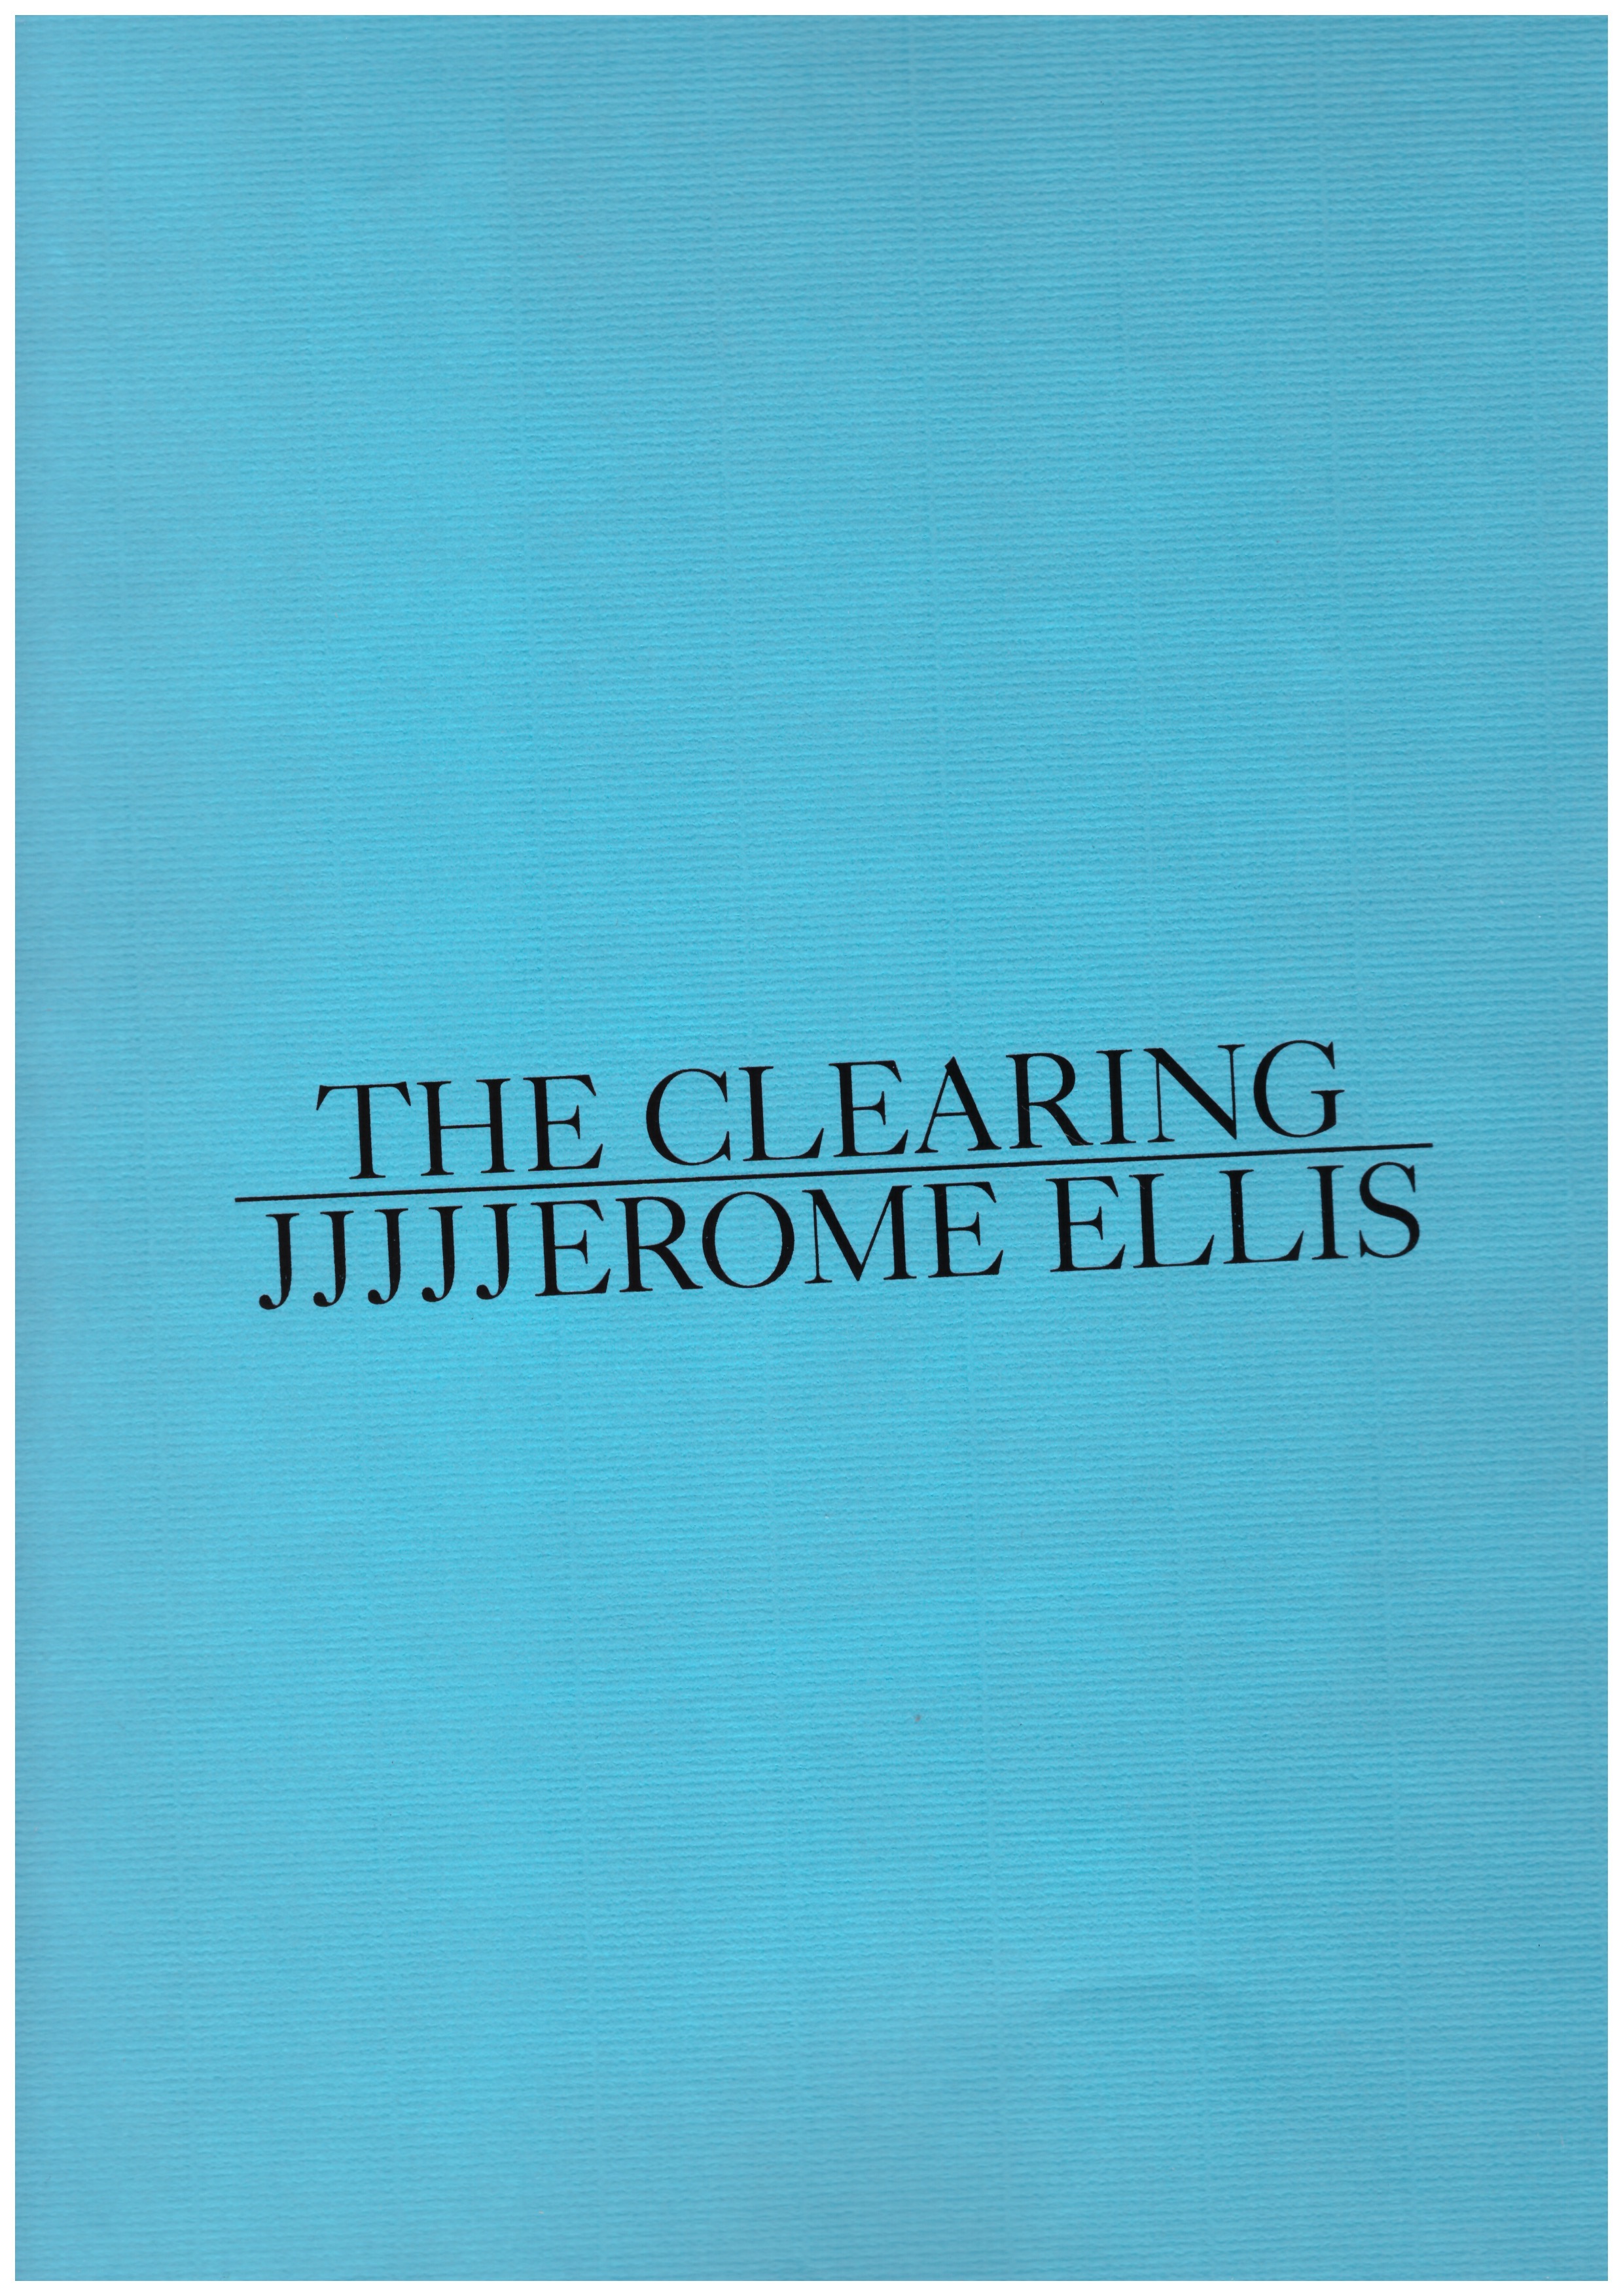 ELLIS, JJJJJerome - The Clearing